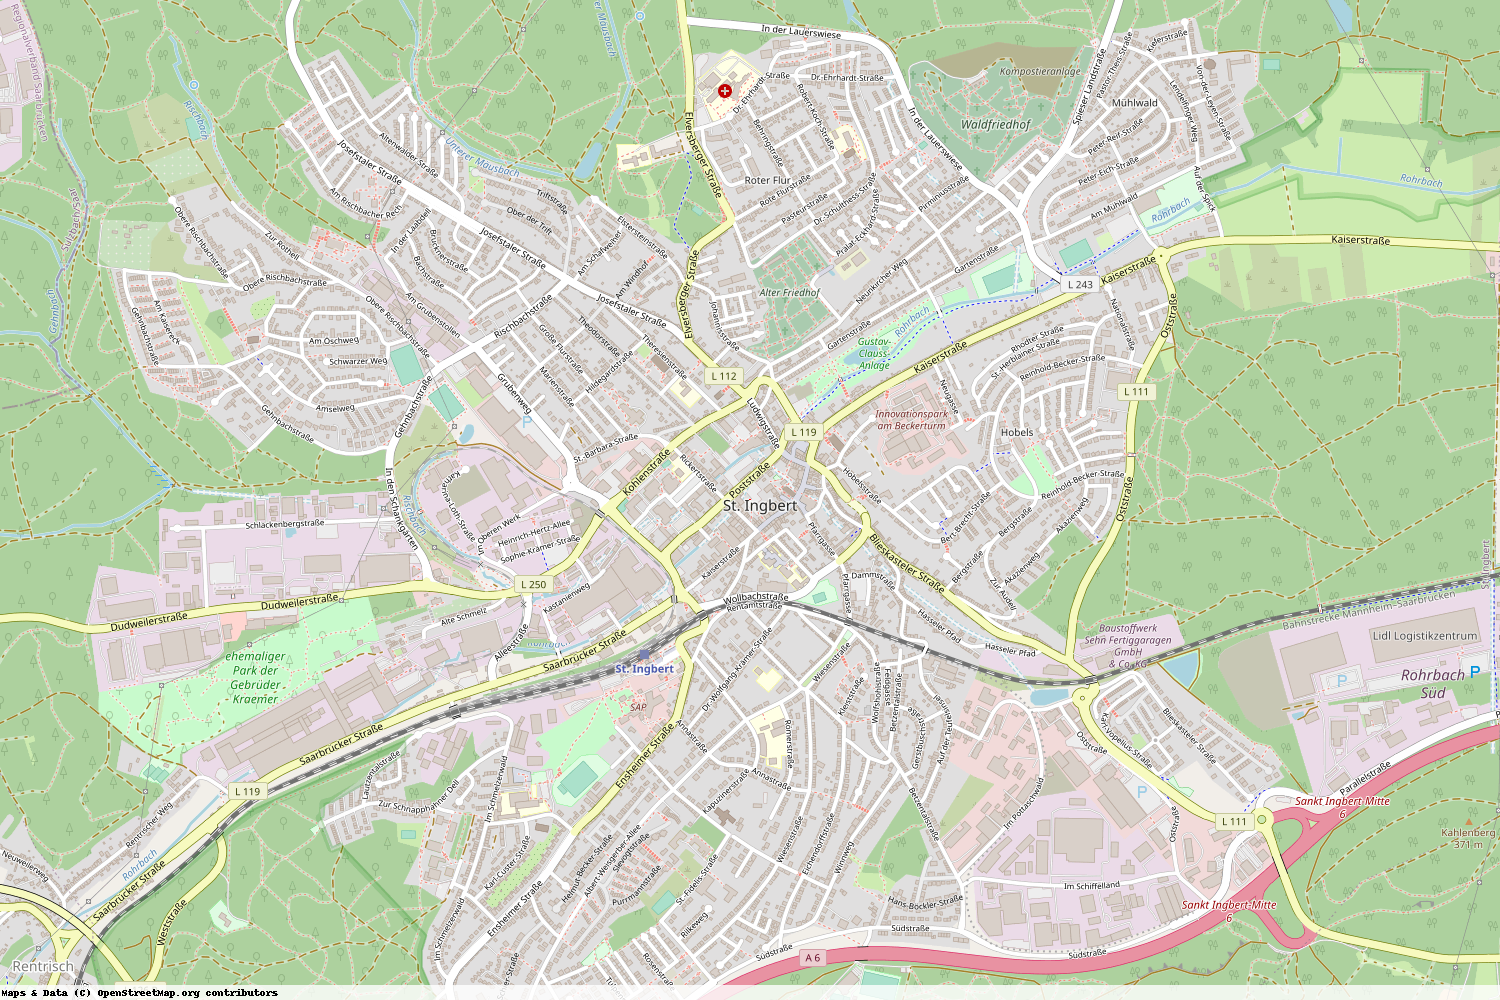 Ist gerade Stromausfall in Saarland - Saarpfalz-Kreis - St. Ingbert?